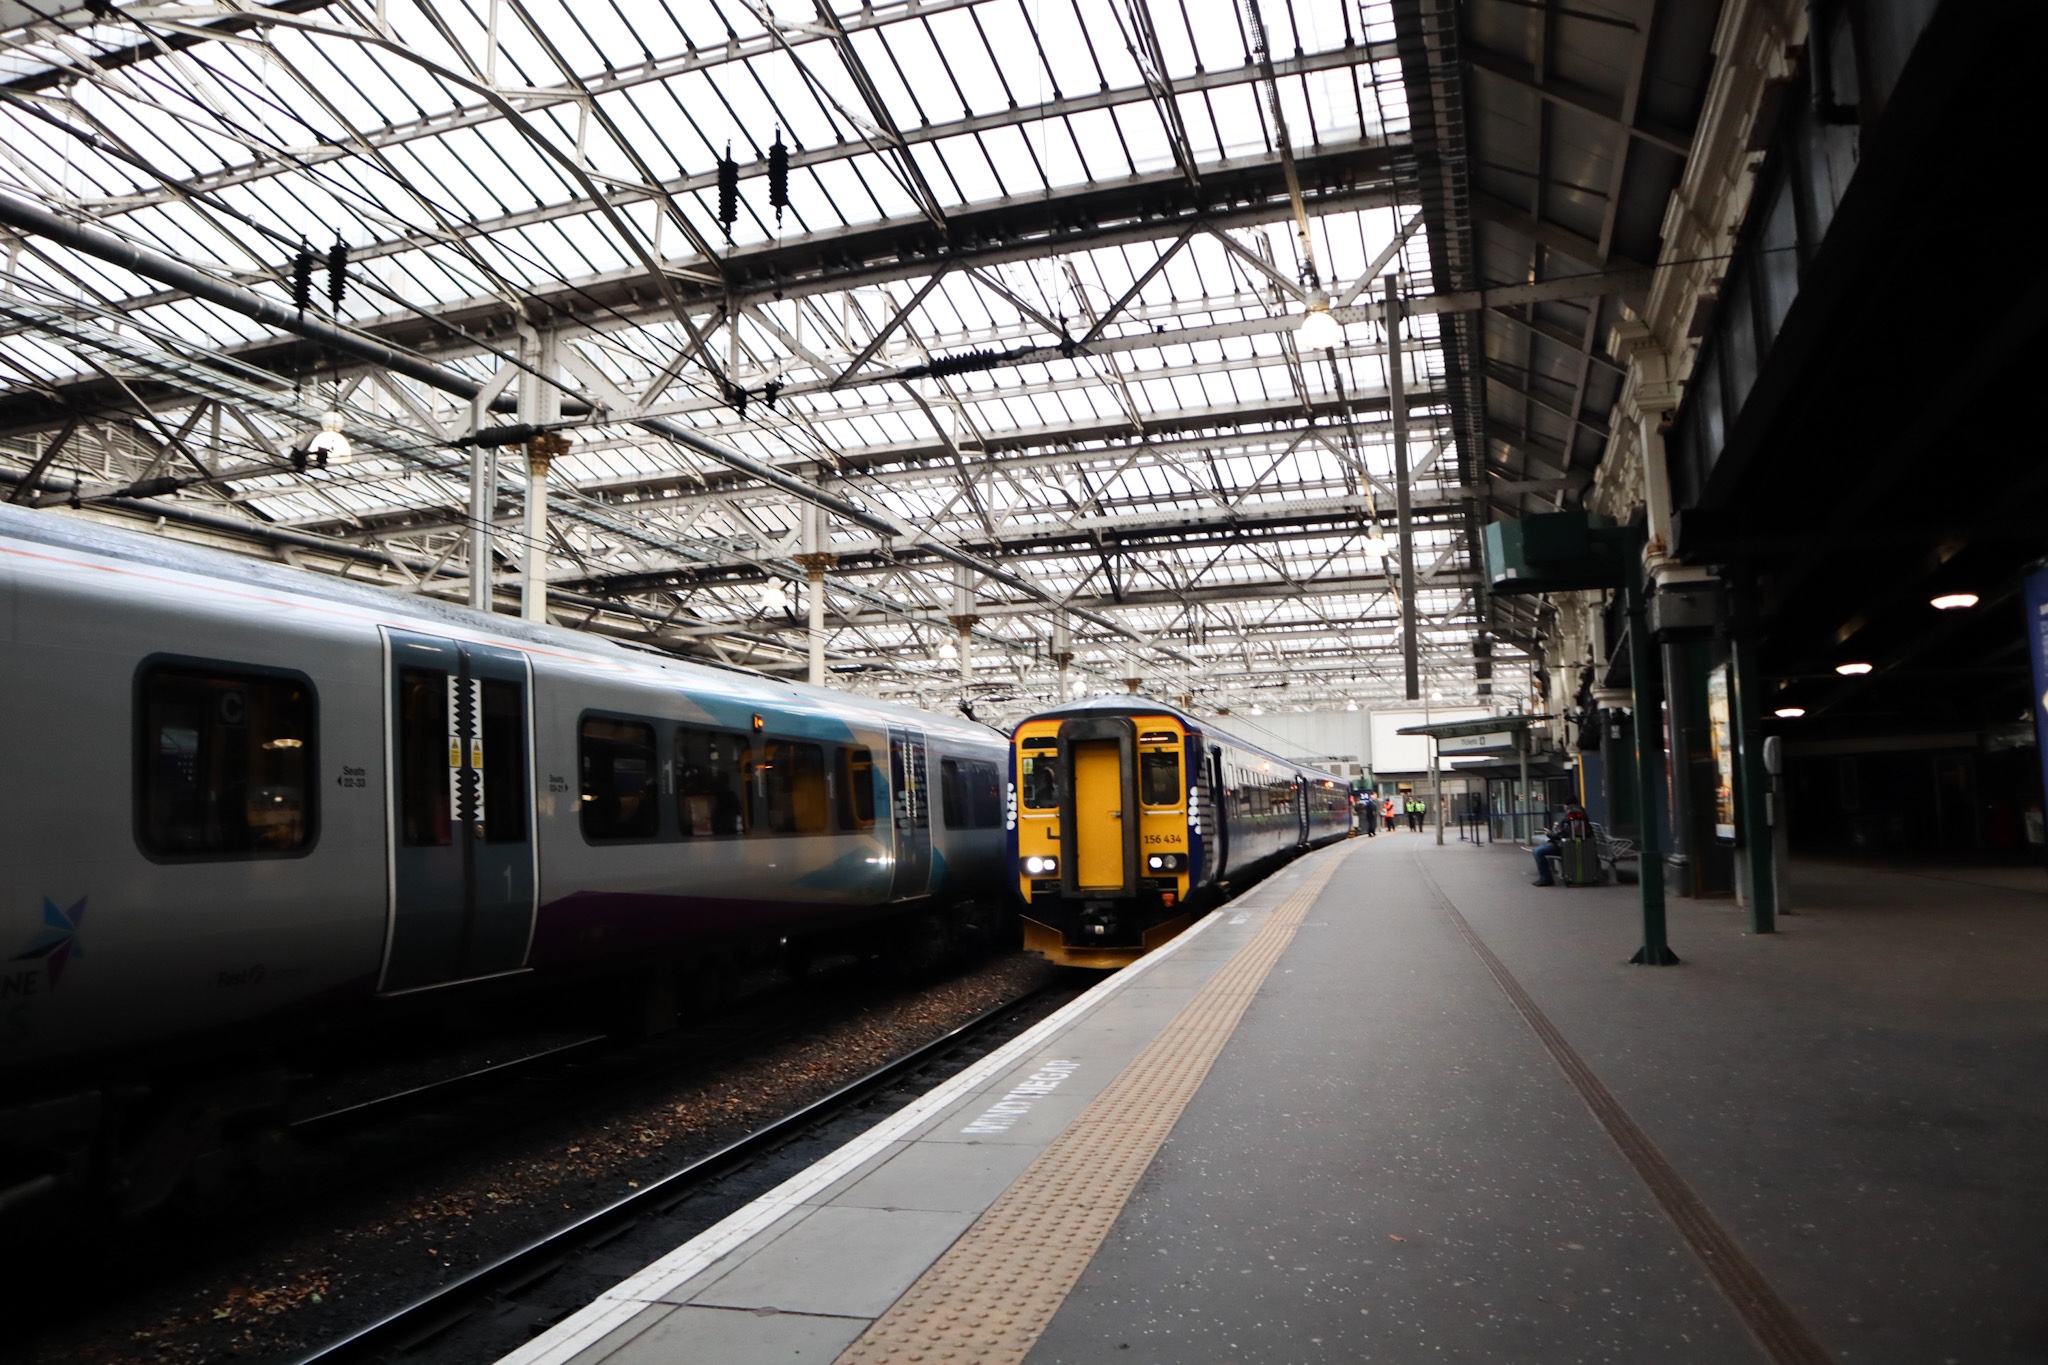 Train Disruption in Scotland to Continue Due to 48-Hour Rail Strike